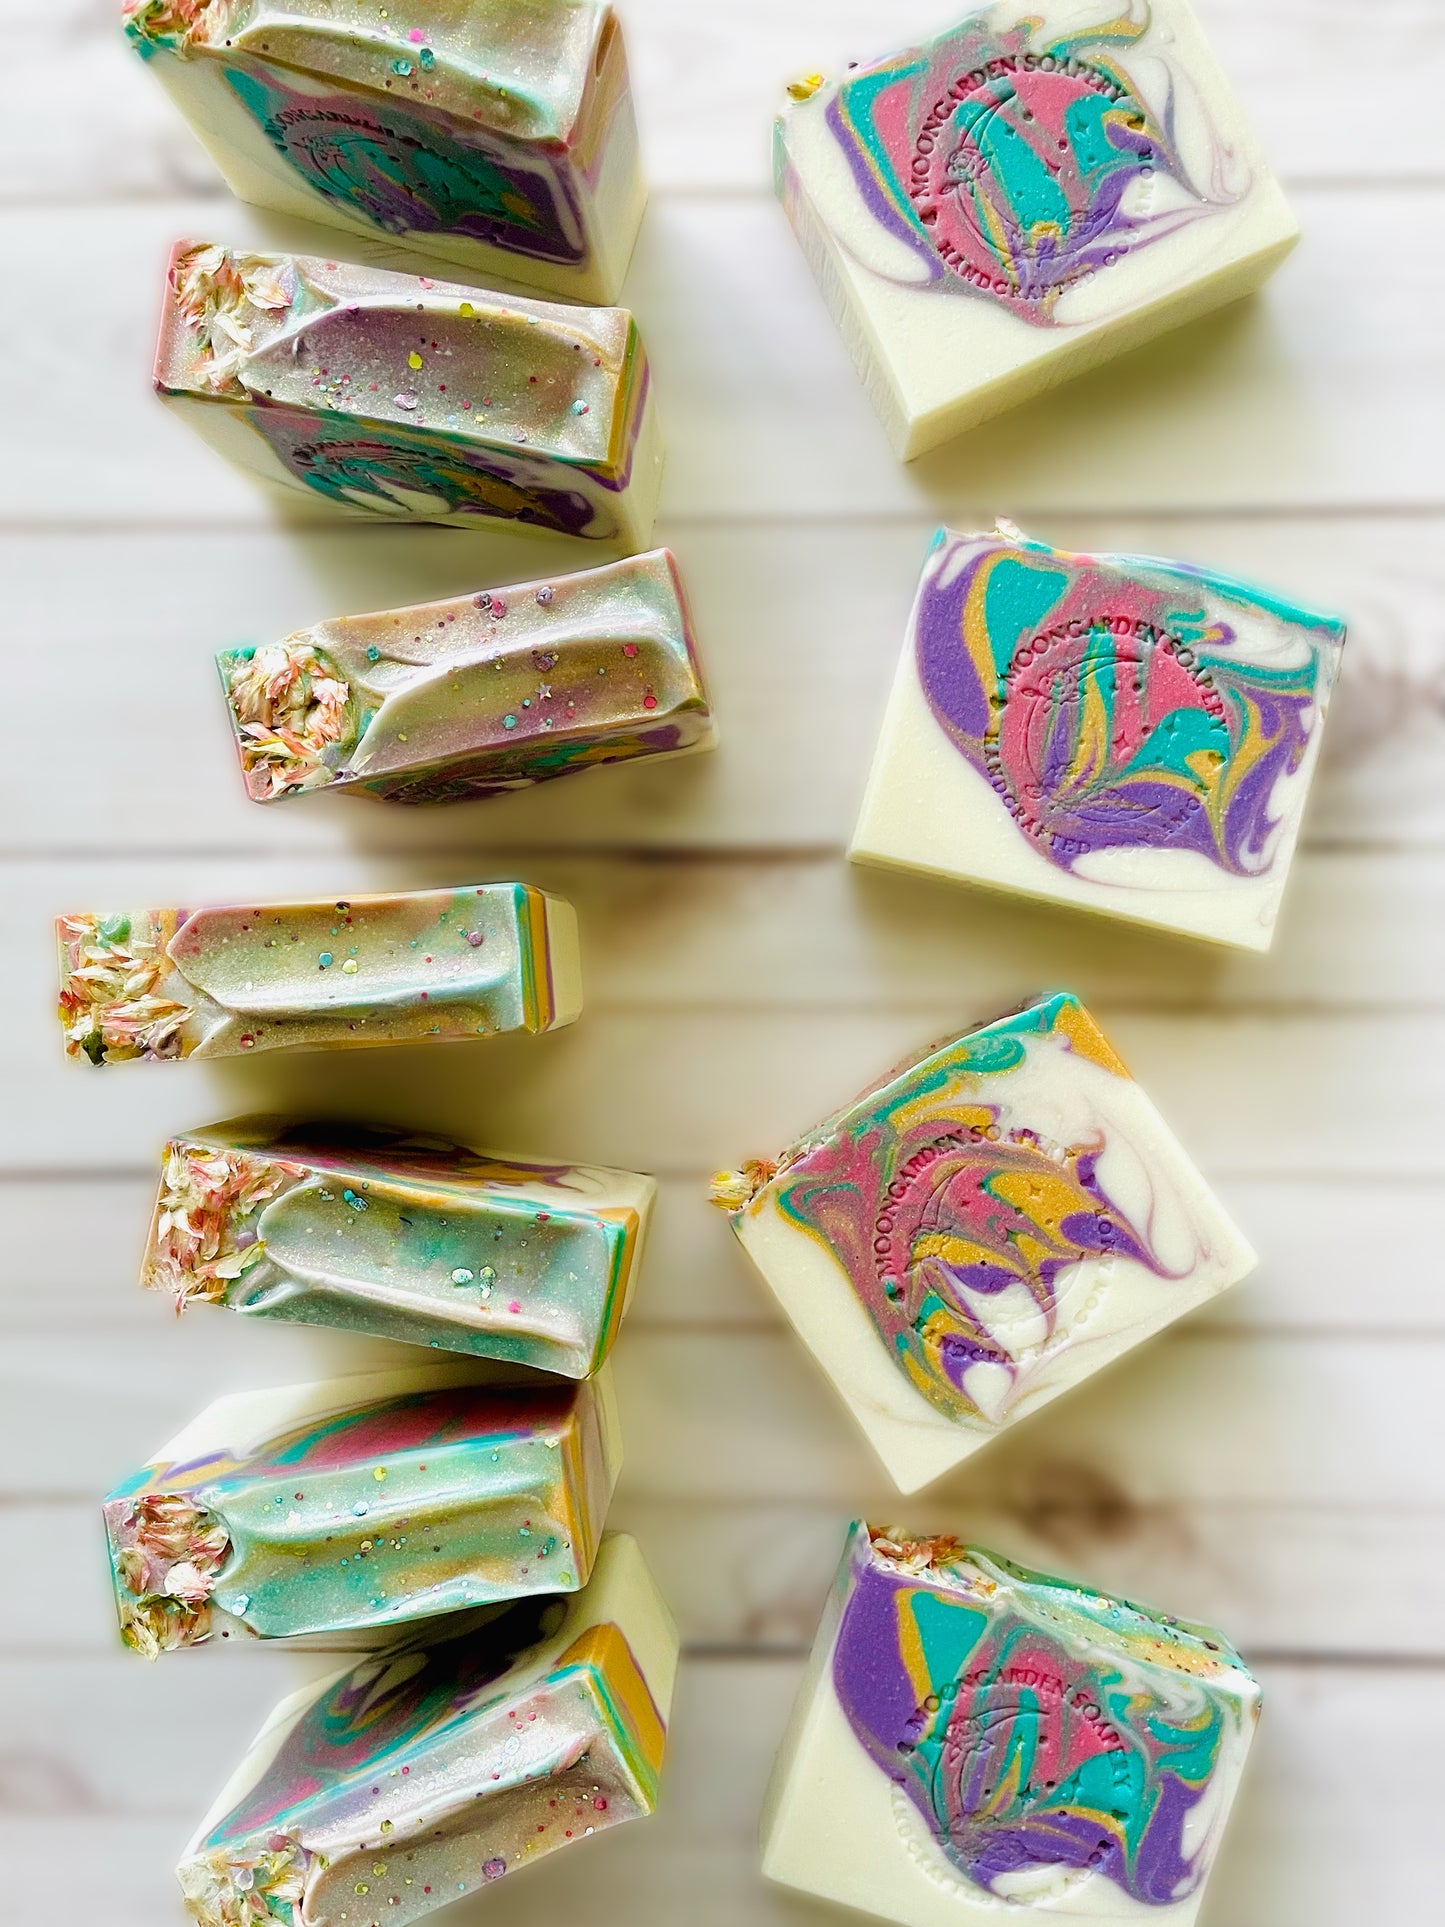 Eleven bars of handmade soap.